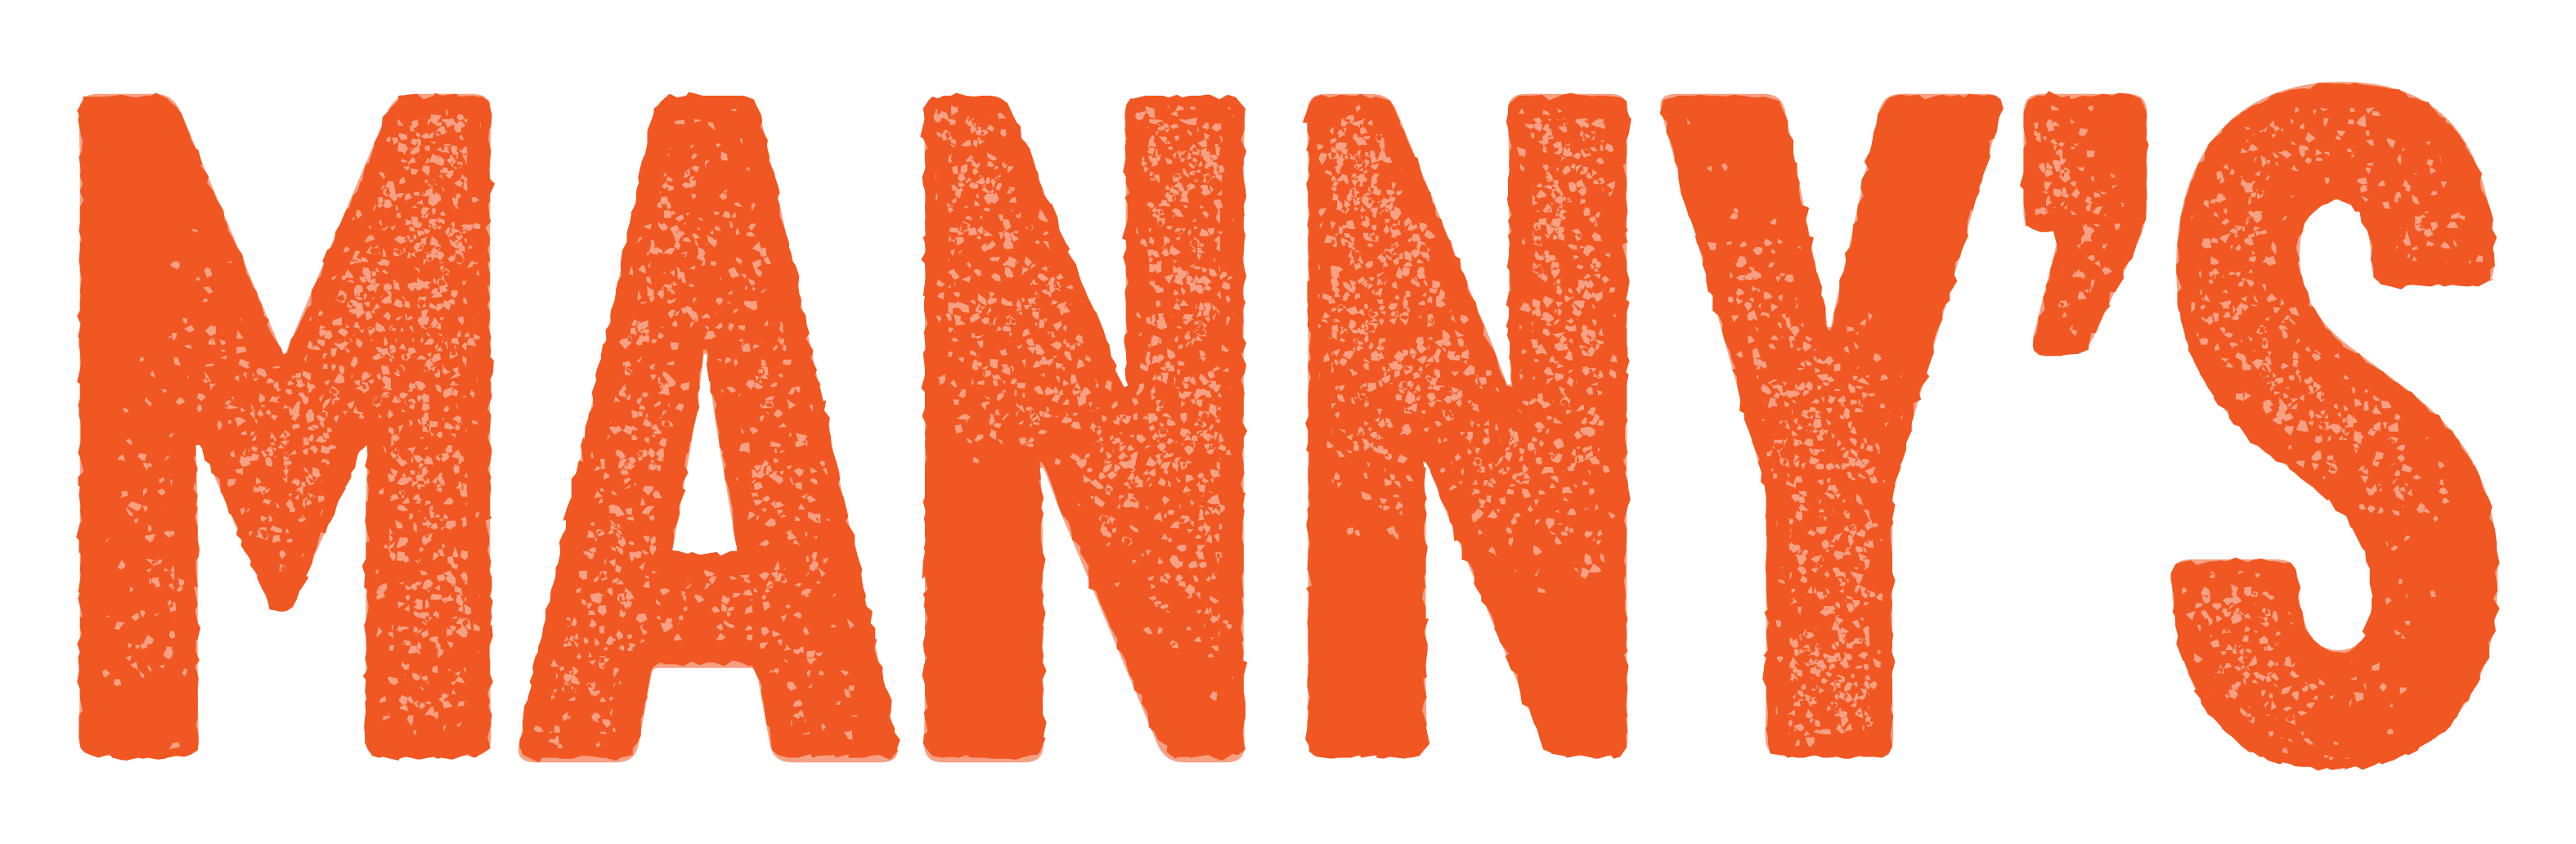 Manny's_Logotype_Red_Mono (1)